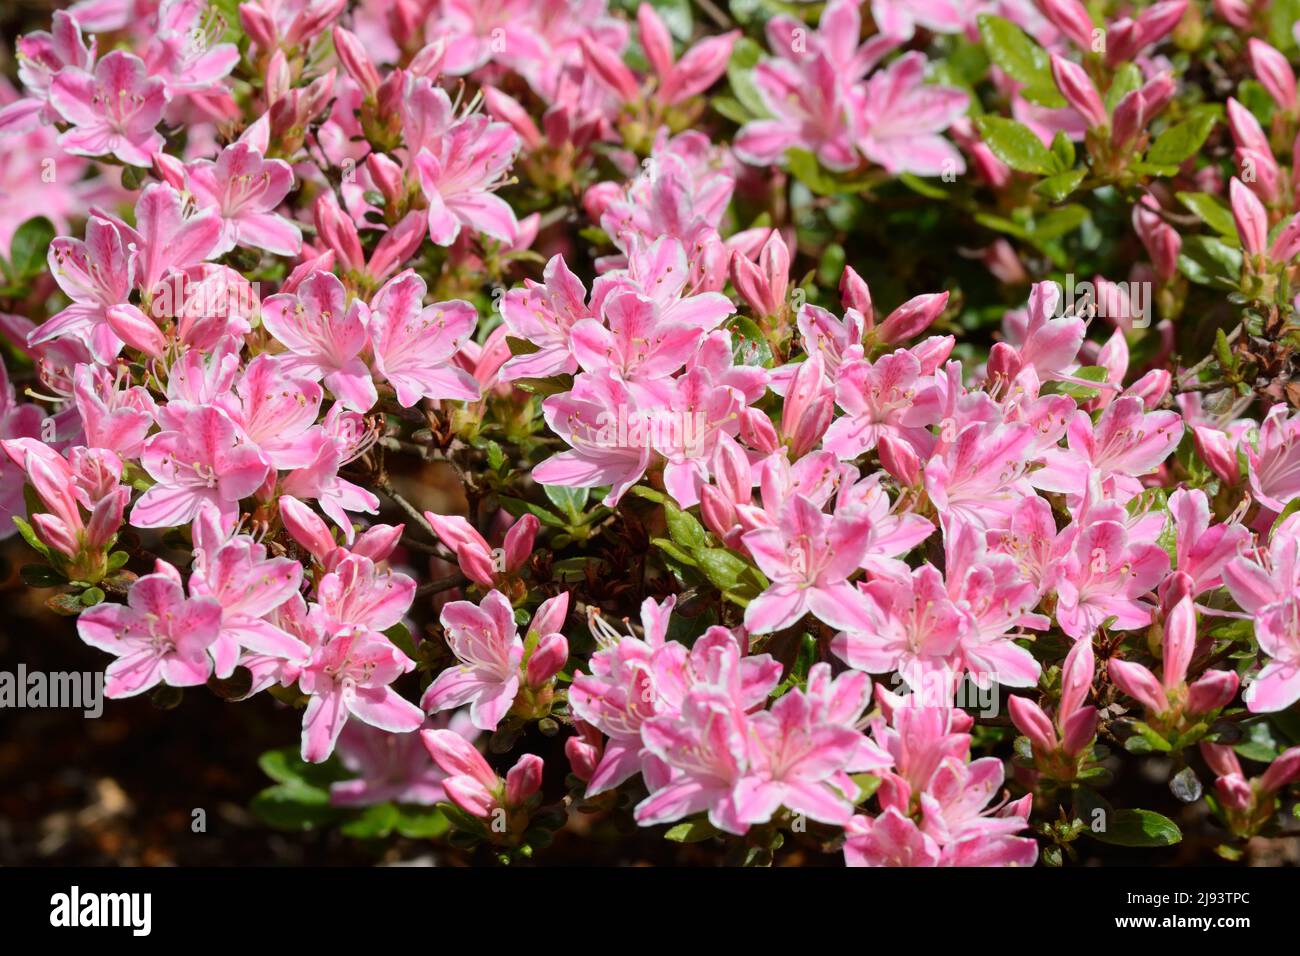 Rhododendron Kermesina Abundancia de flores rosadas con borde blanco en primavera Foto de stock